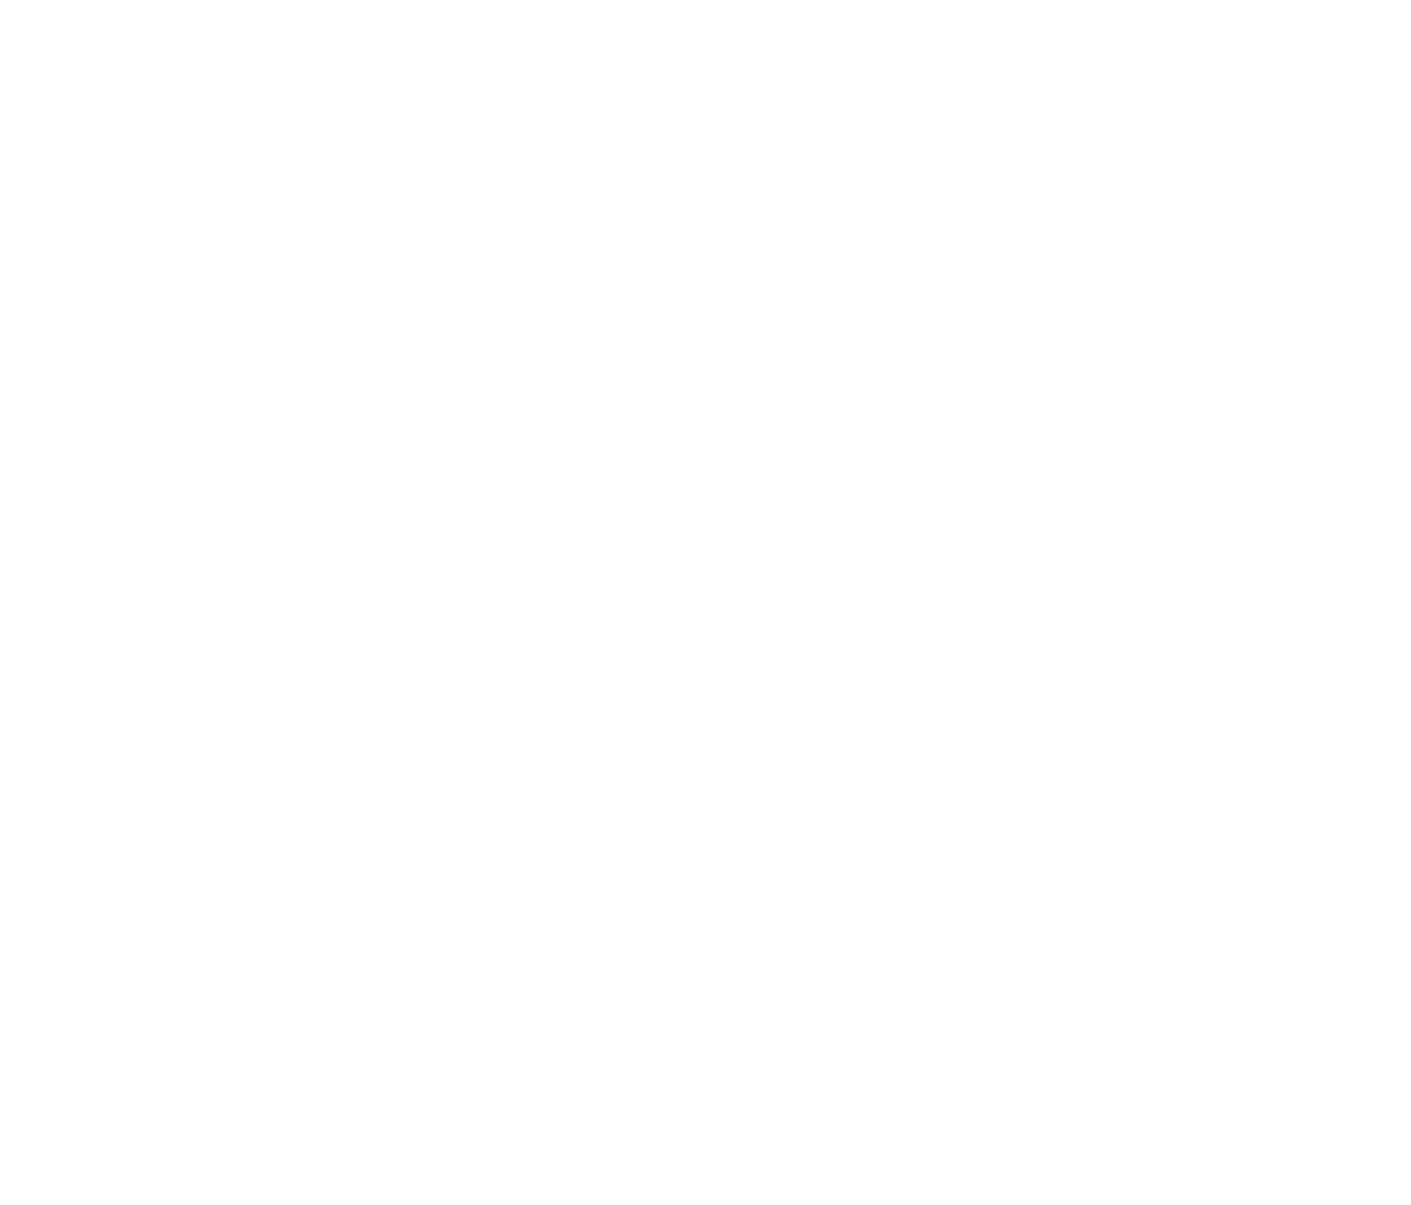 Tatler 2022 - Best Prep School Headmaster